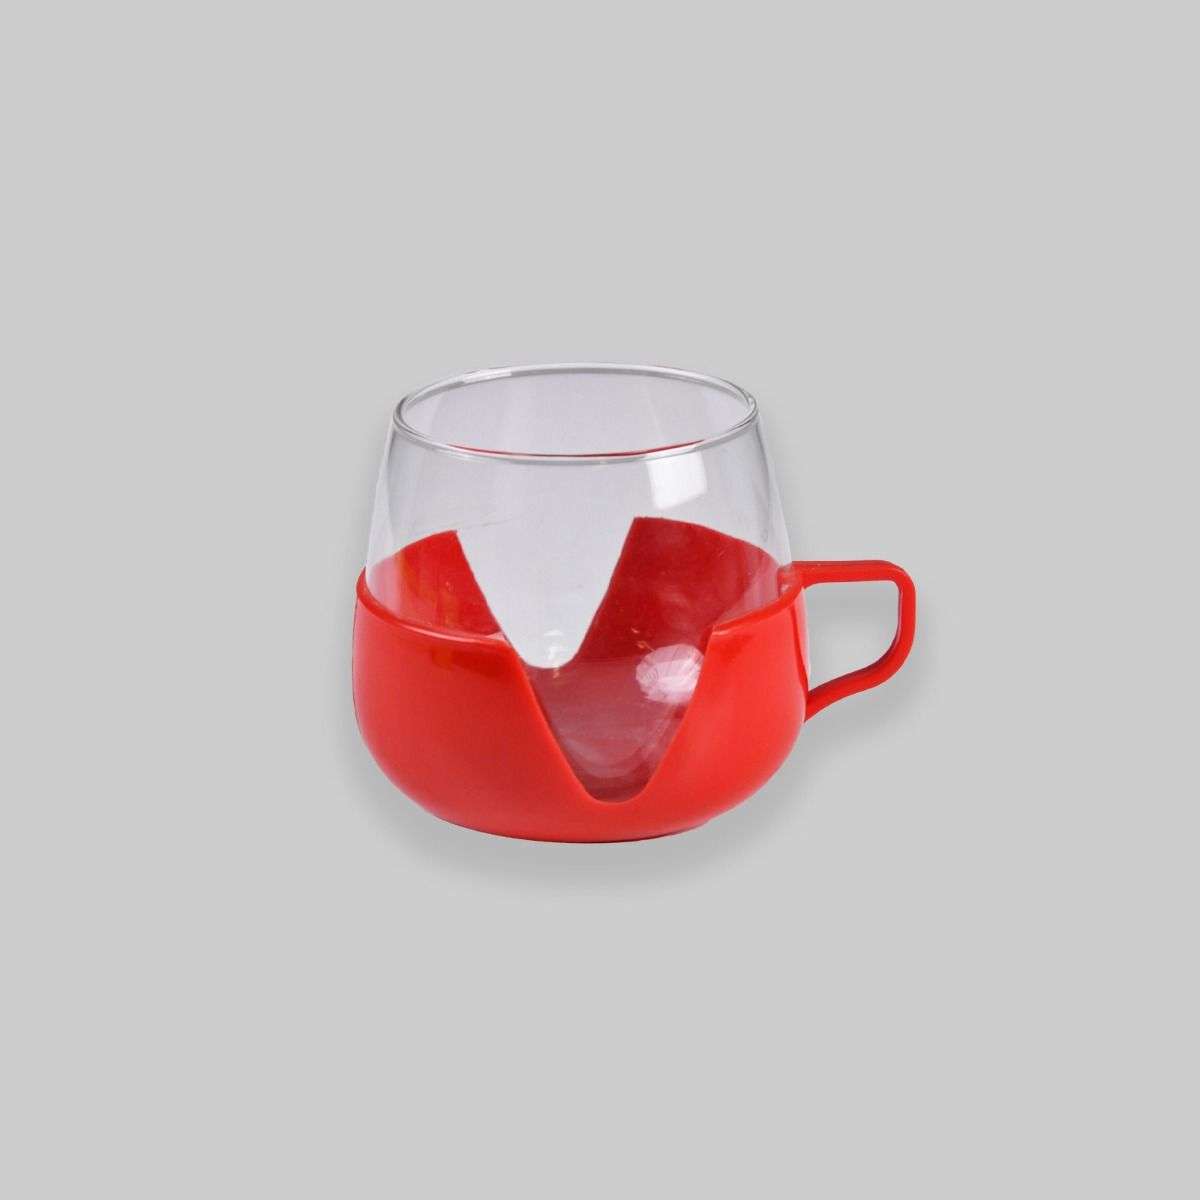 Vintage Pyrex Drink-Up Glass Mug With Plastic Casing